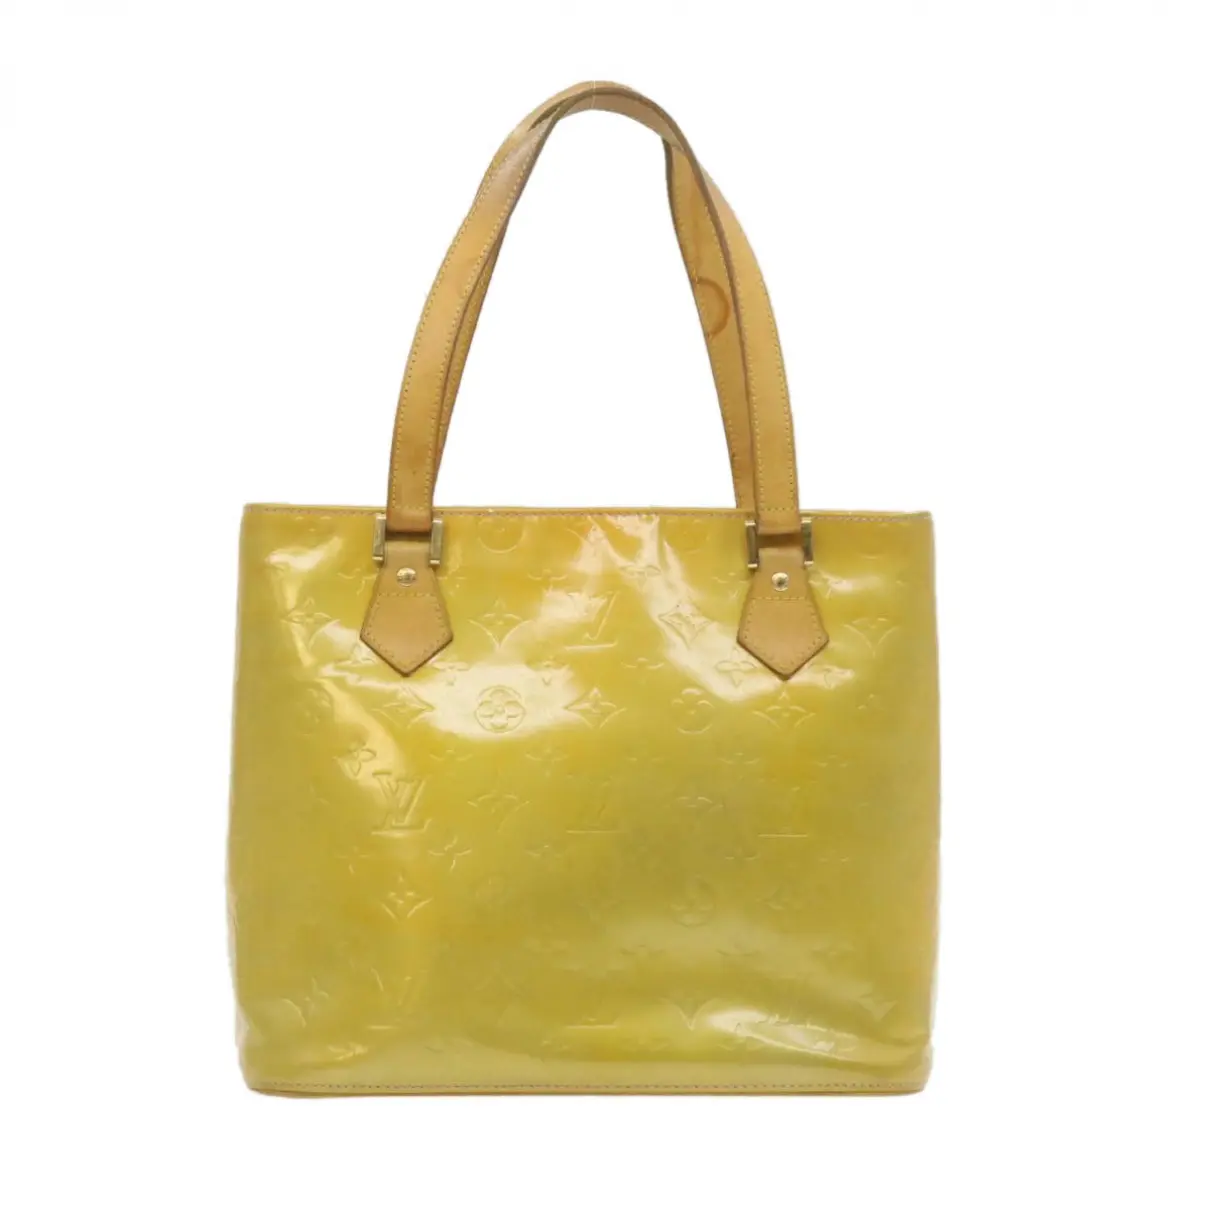 Buy Louis Vuitton Houston patent leather clutch bag online